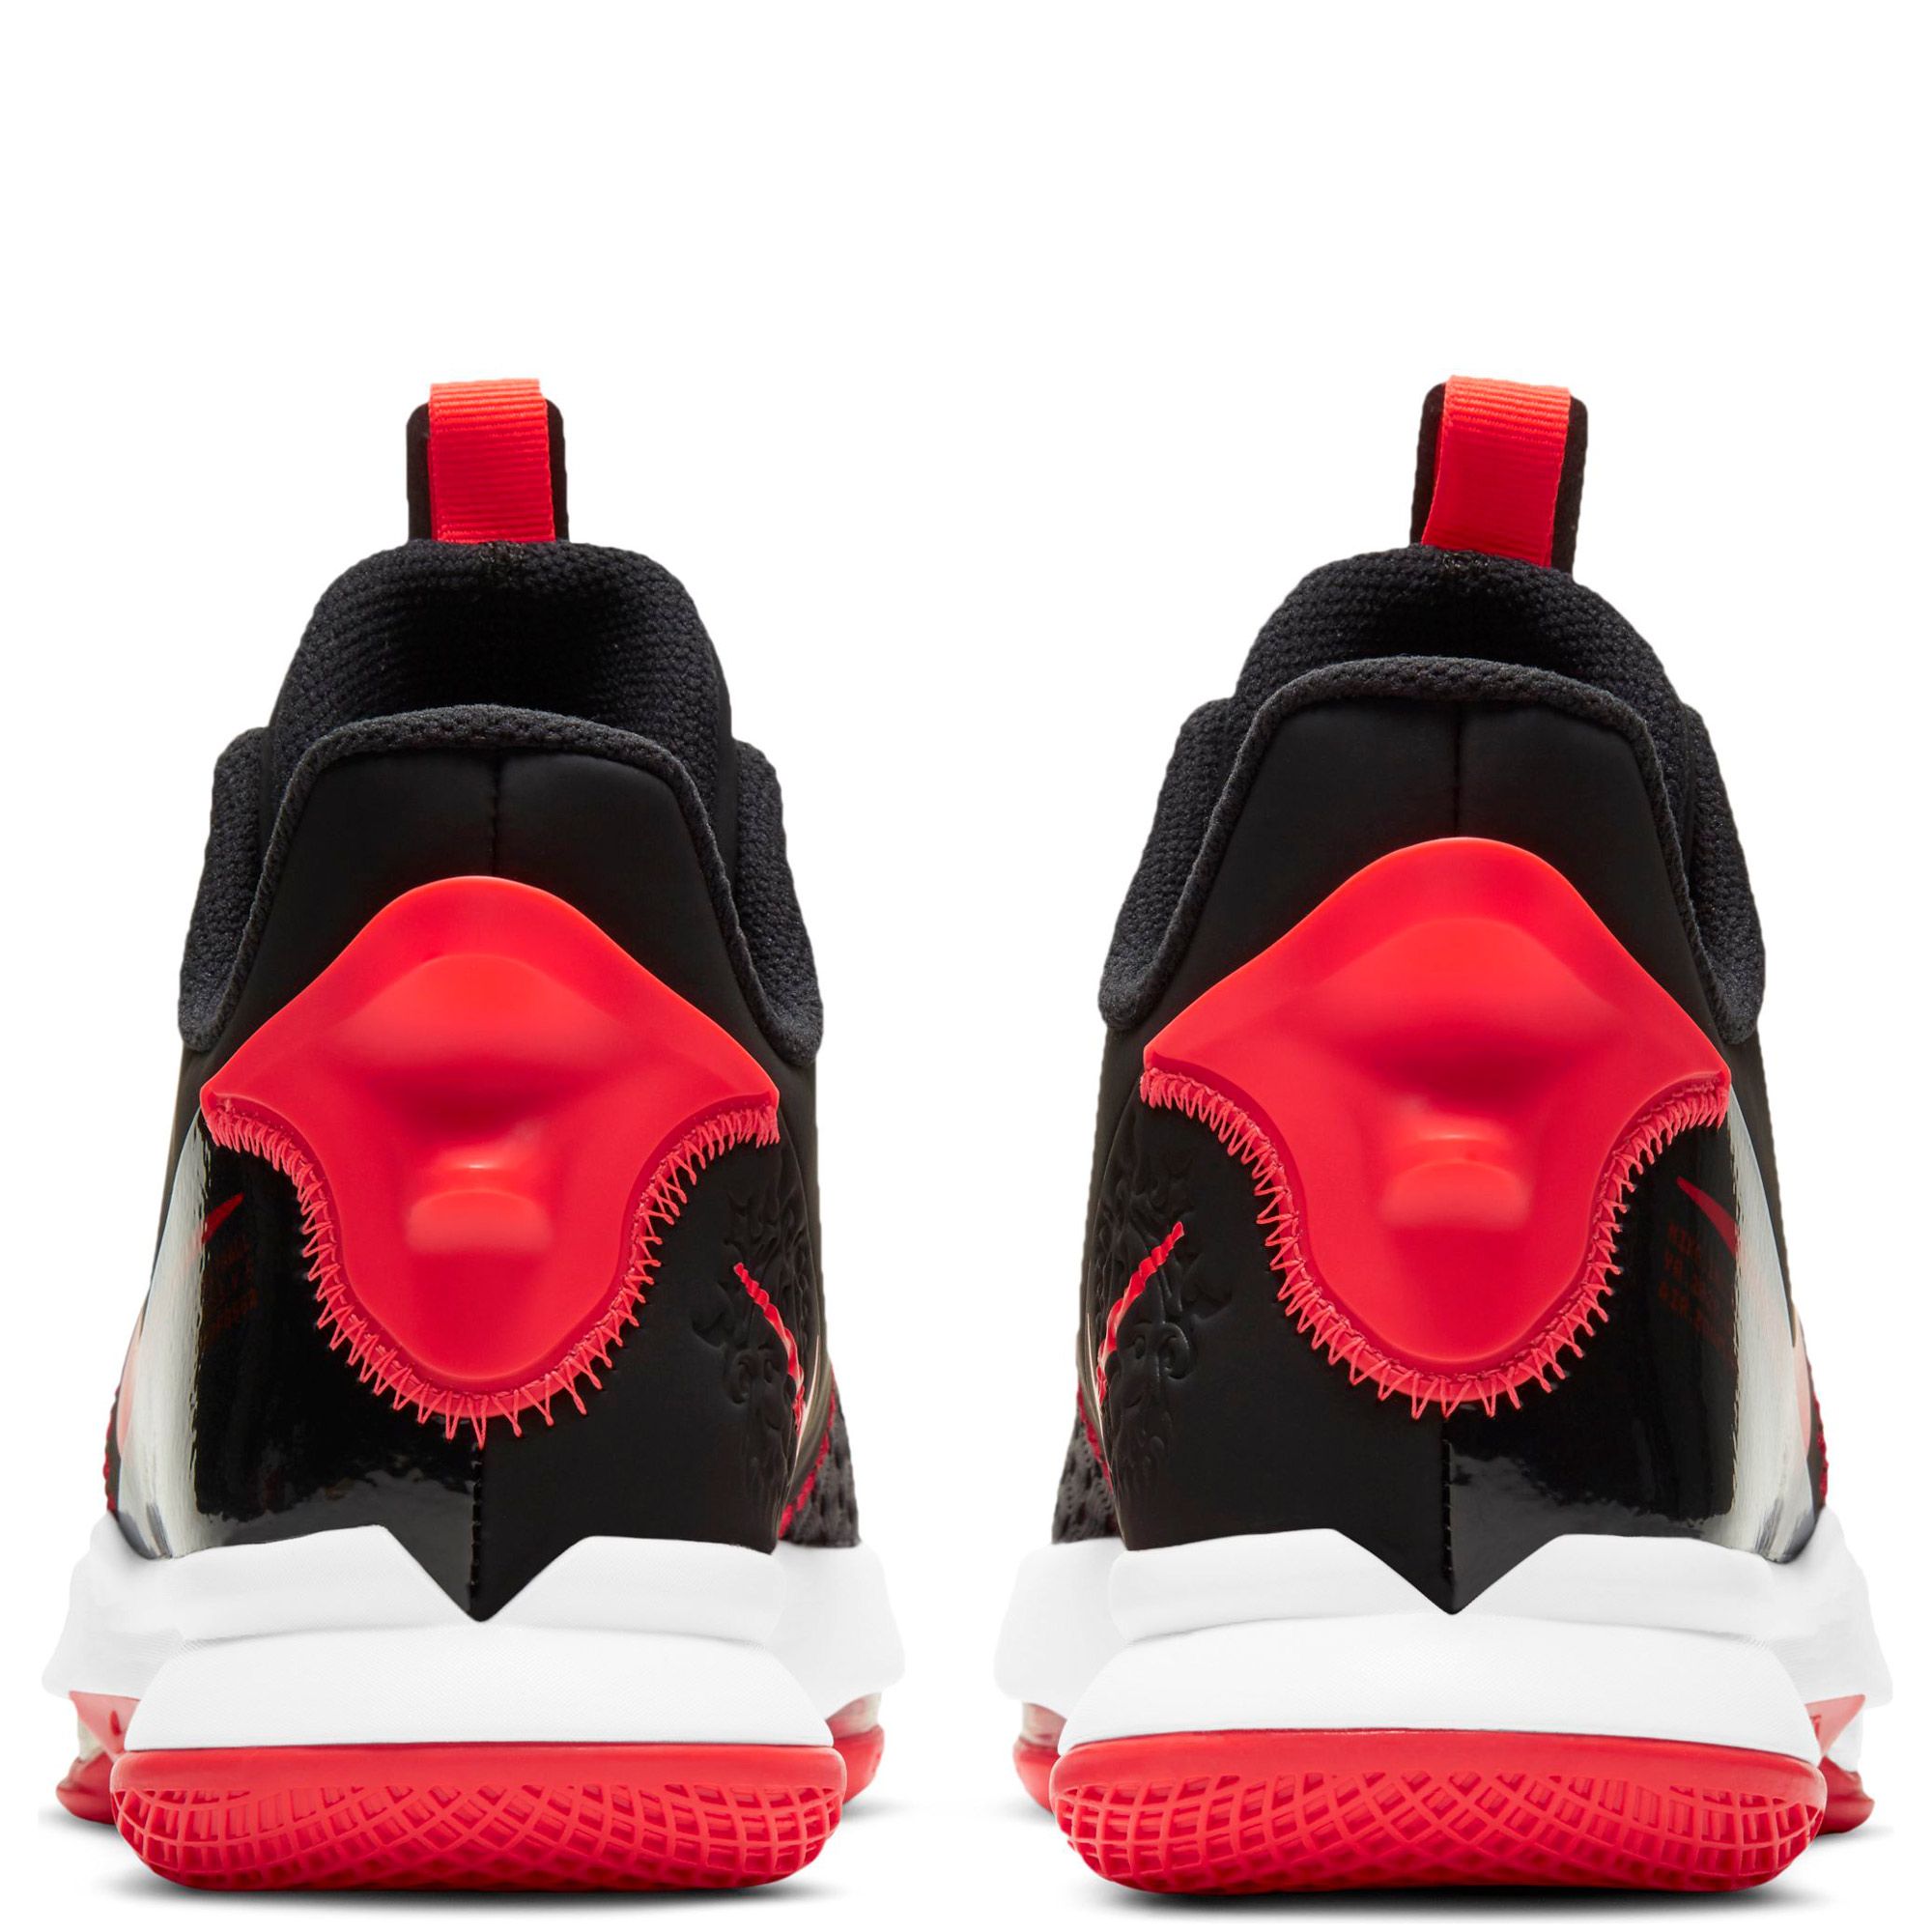 Nike LeBron Witness 5 Basketball Shoes, Men's, Black